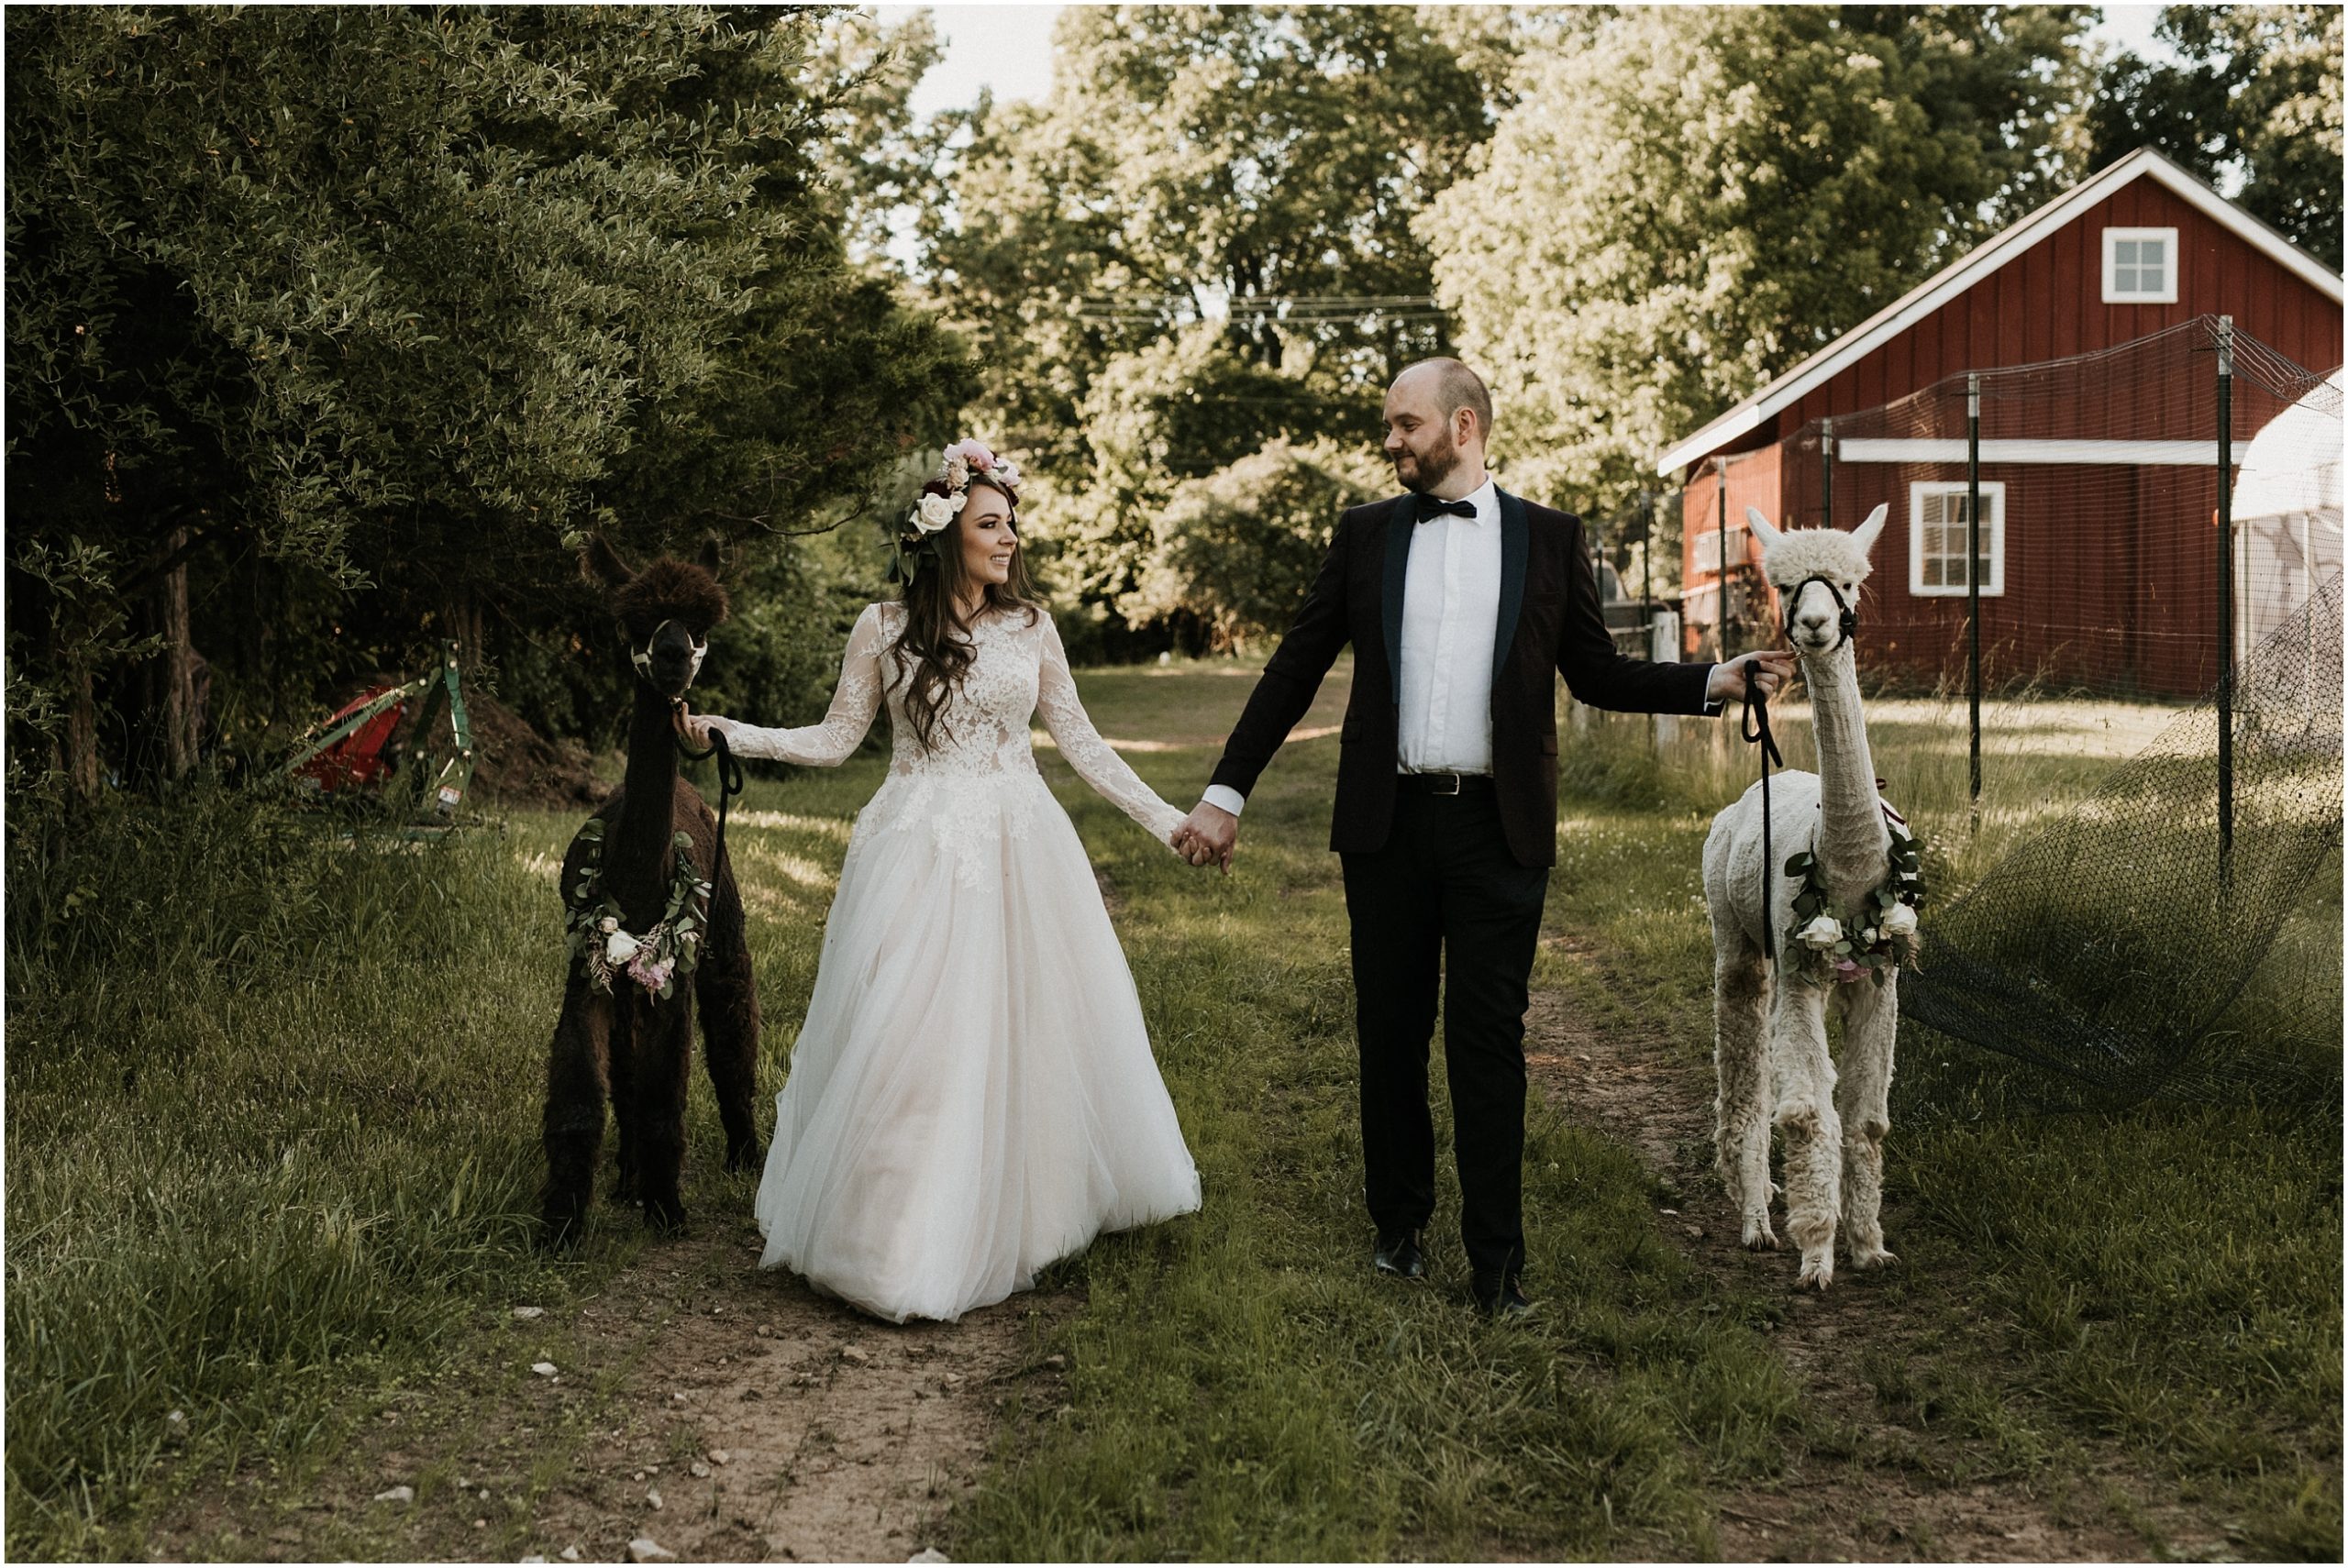 Tori Kelner Photography Micro Weddings & Elopements